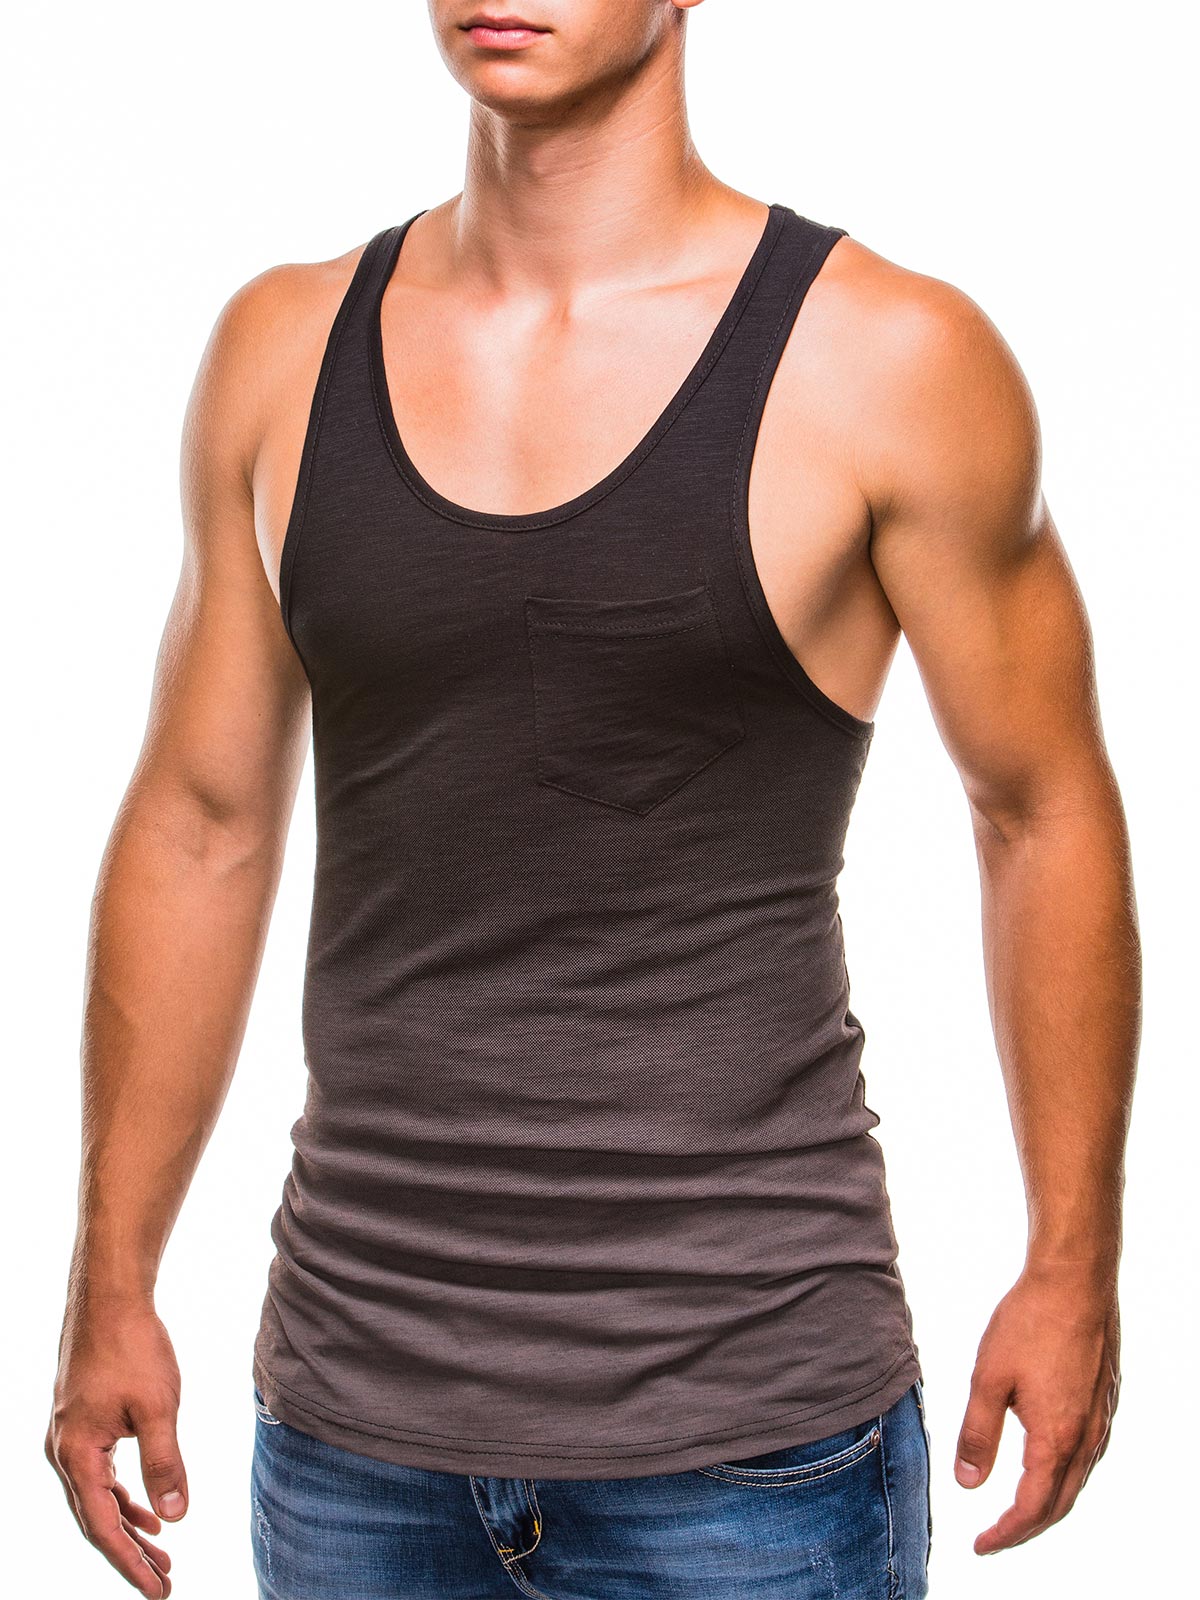 Men's plain tank top S845 - black | MODONE wholesale - Clothing For Men